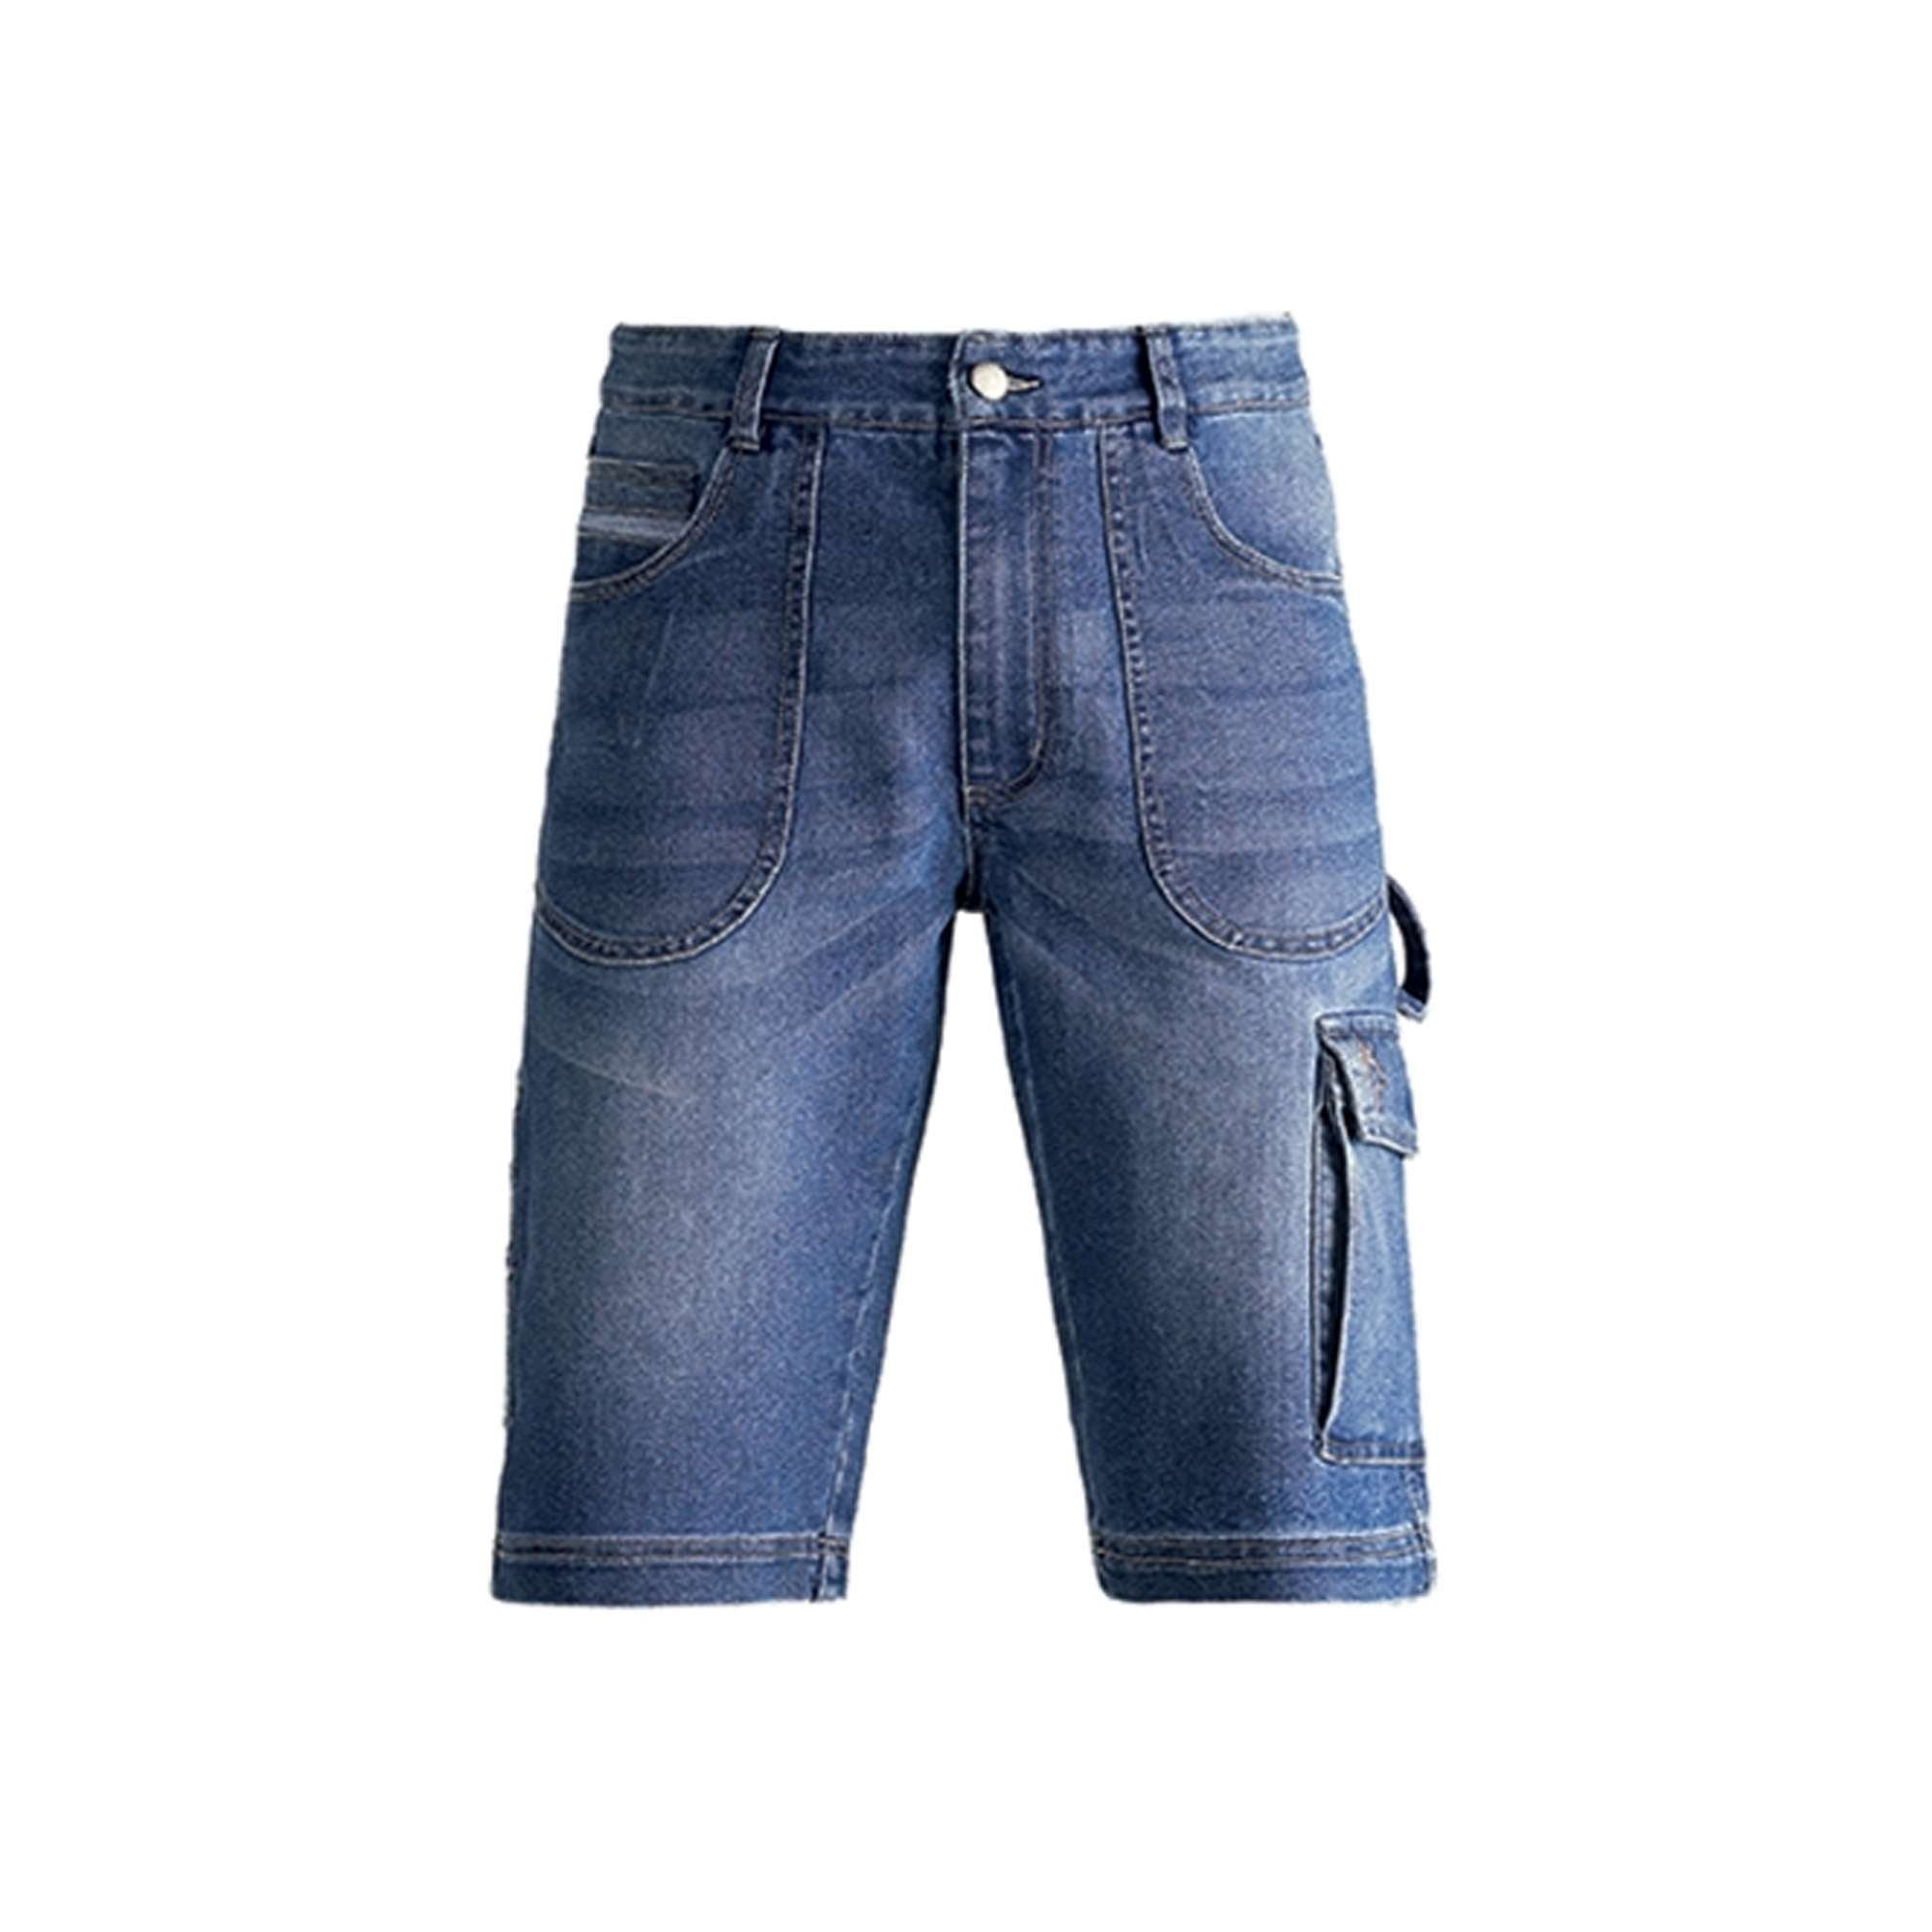 Short denim jeans pants XL - 36087 Kapriol